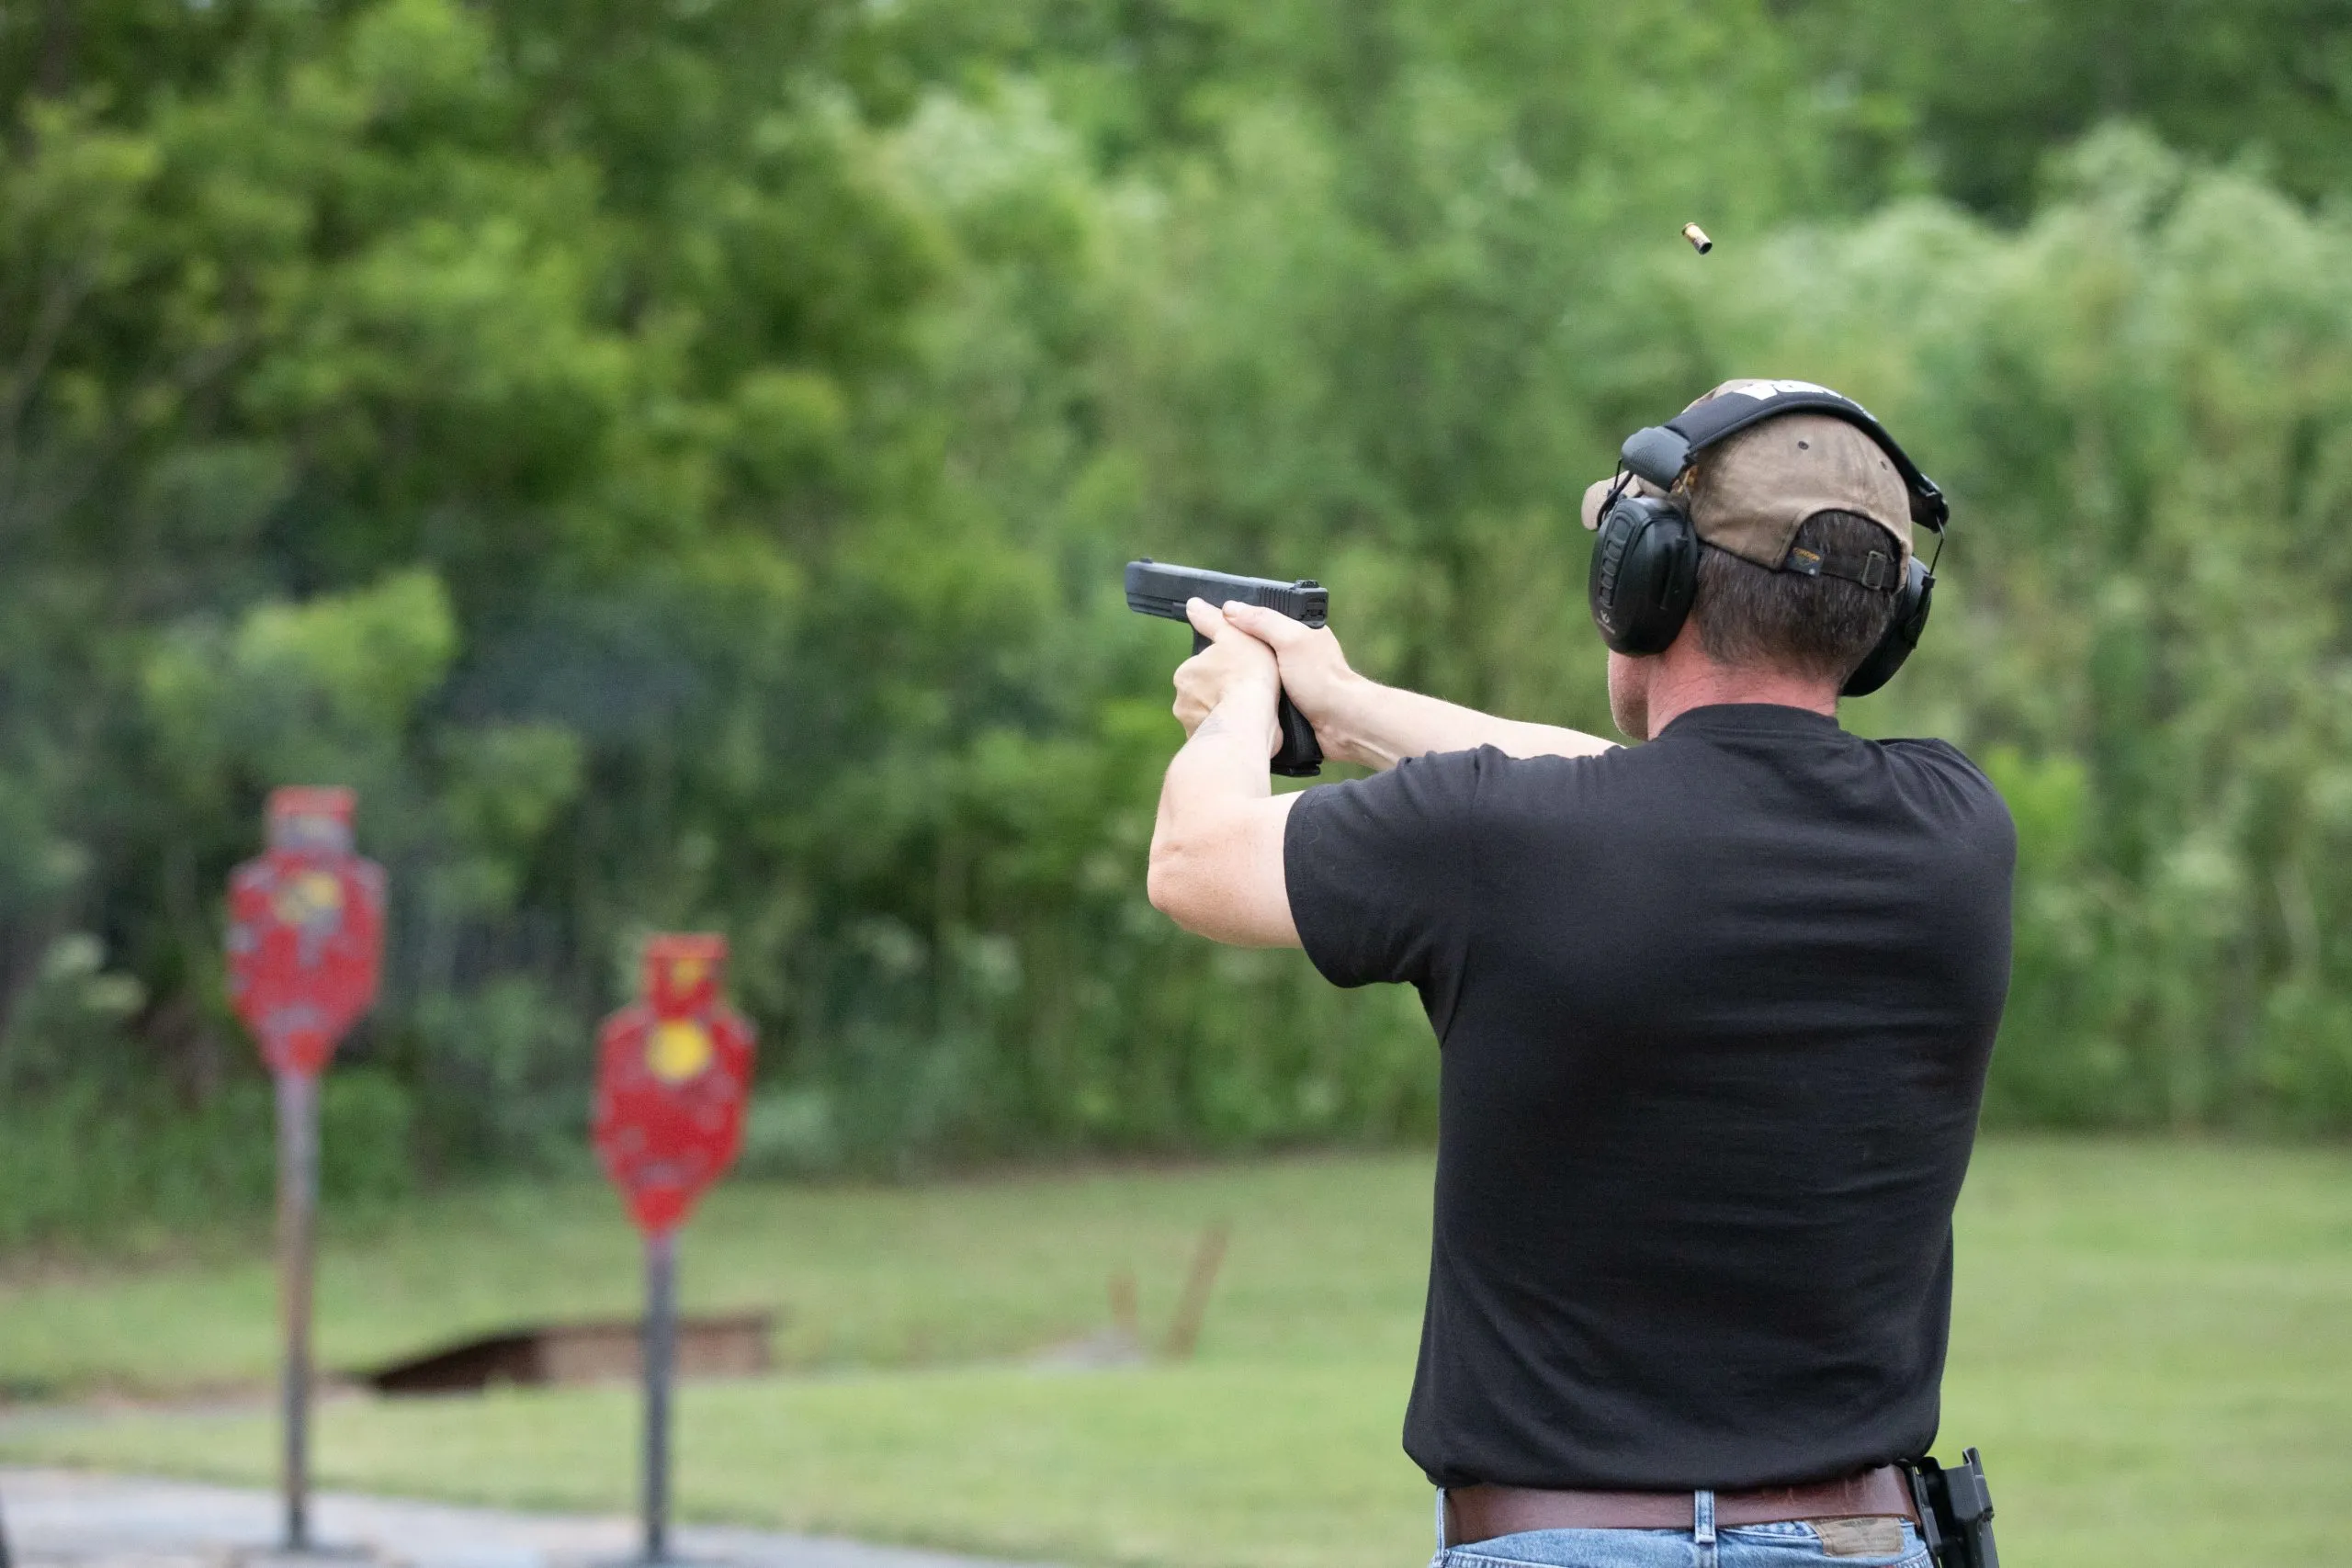 Man shooting with a gun at outdoor range